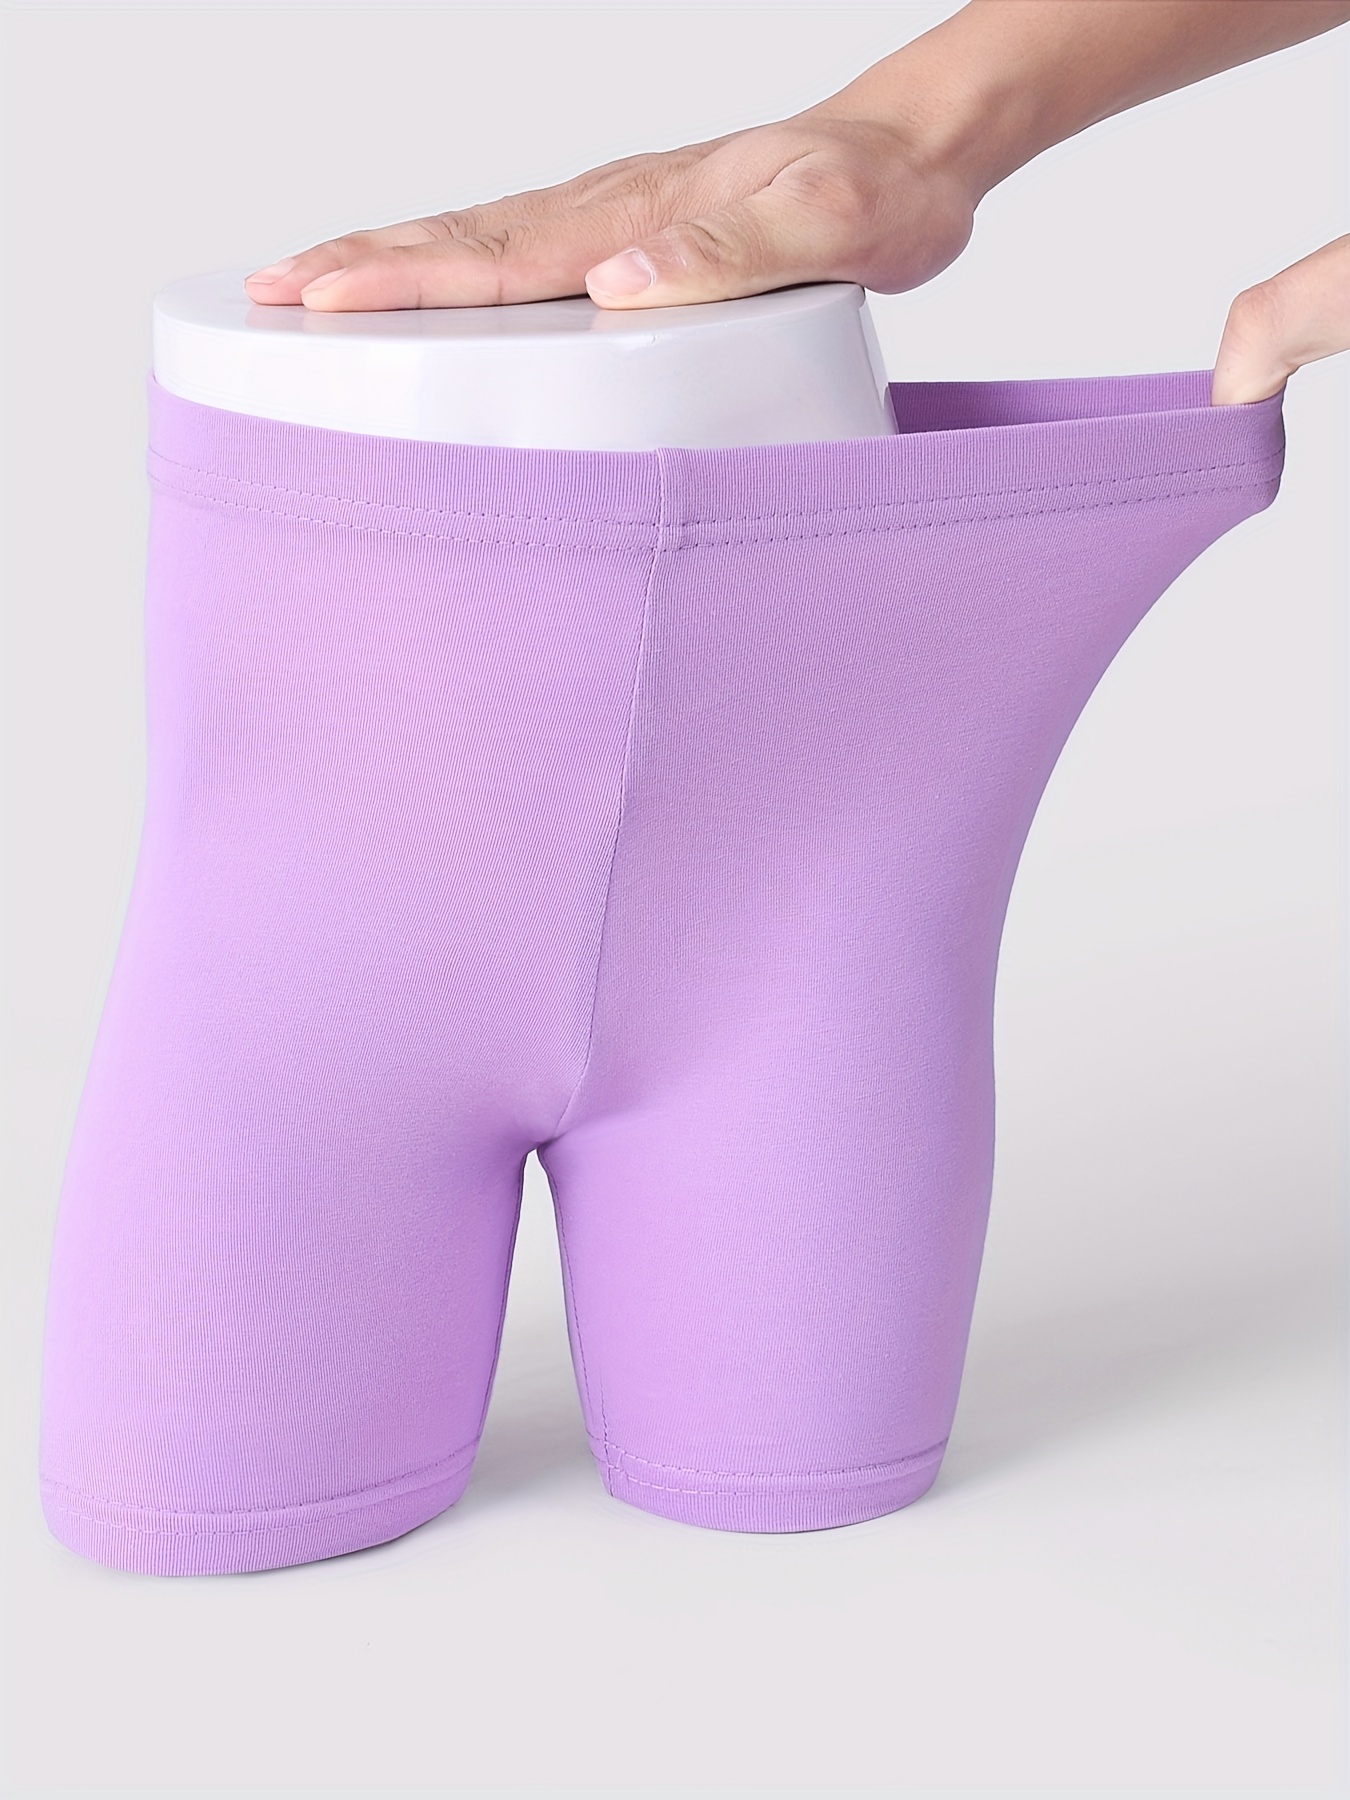 Purple Cotton Bike Shorts for Girls